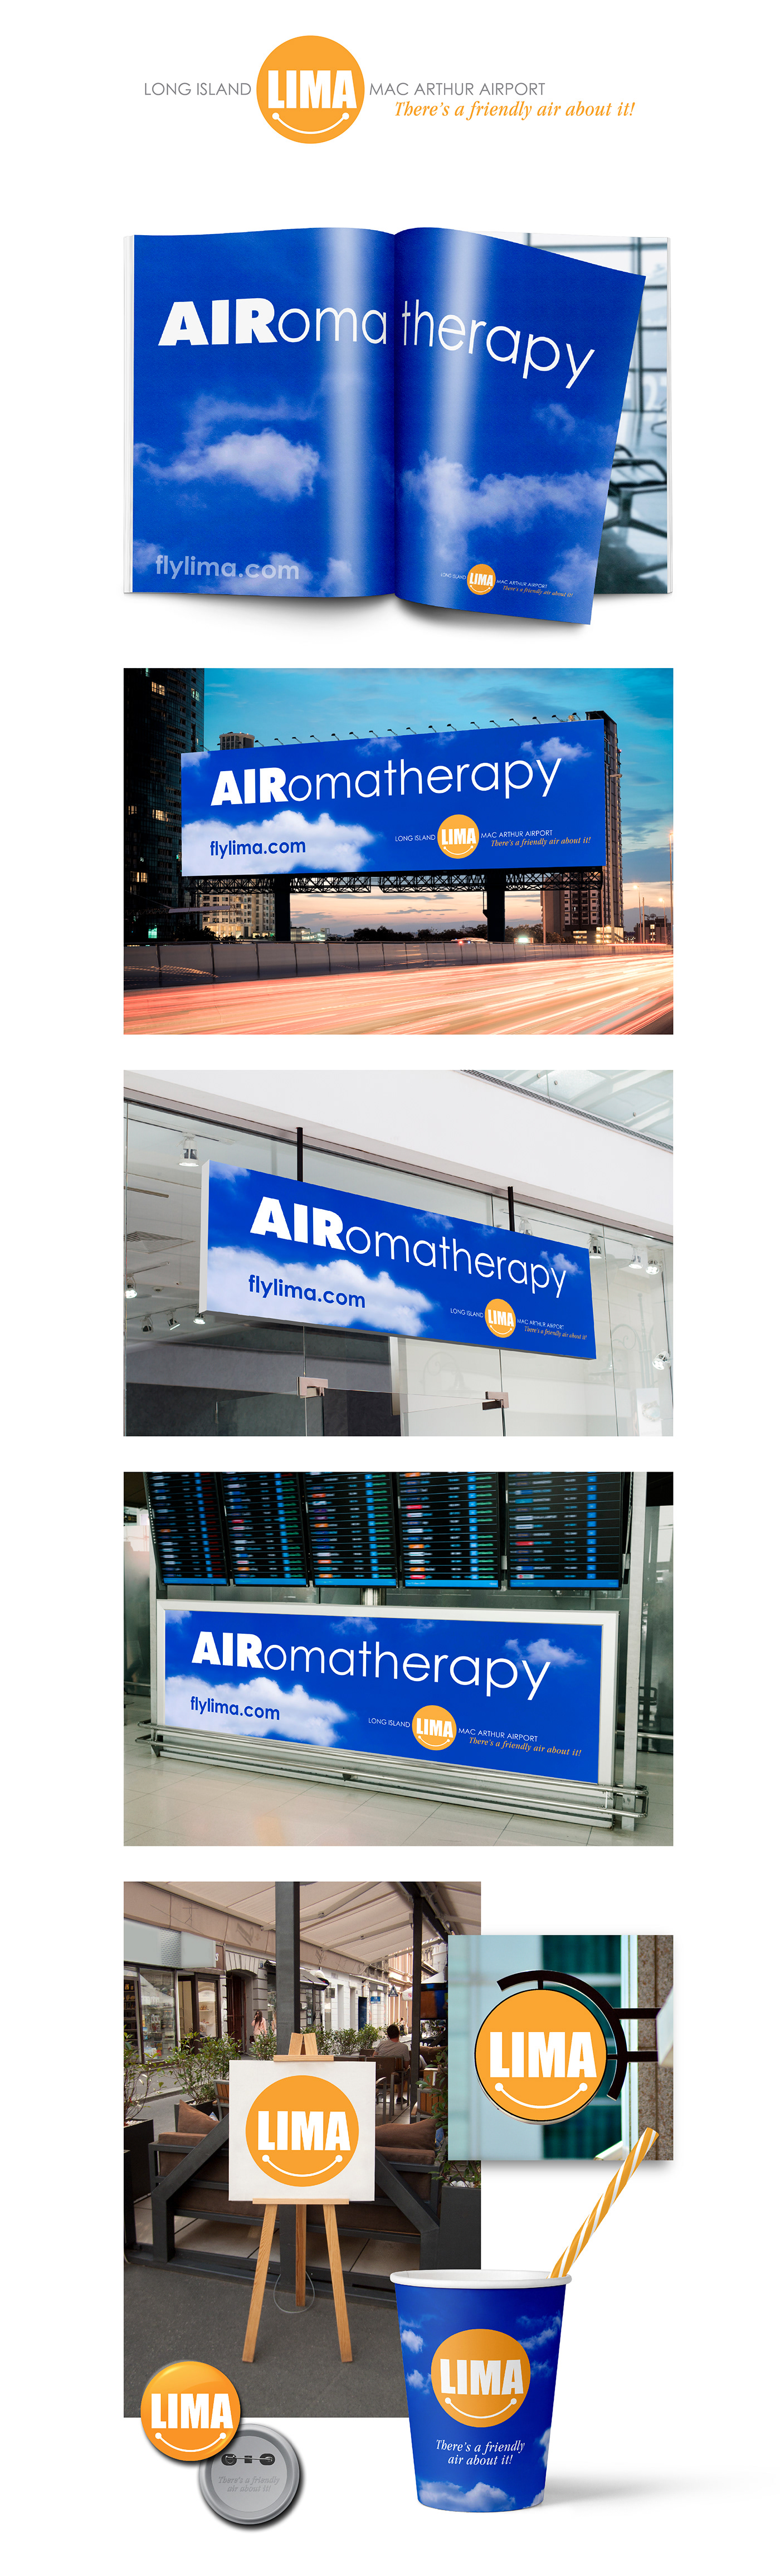 Long Island Mac Arthur Airport logo design, branding, OOH and advertising campaign proposal